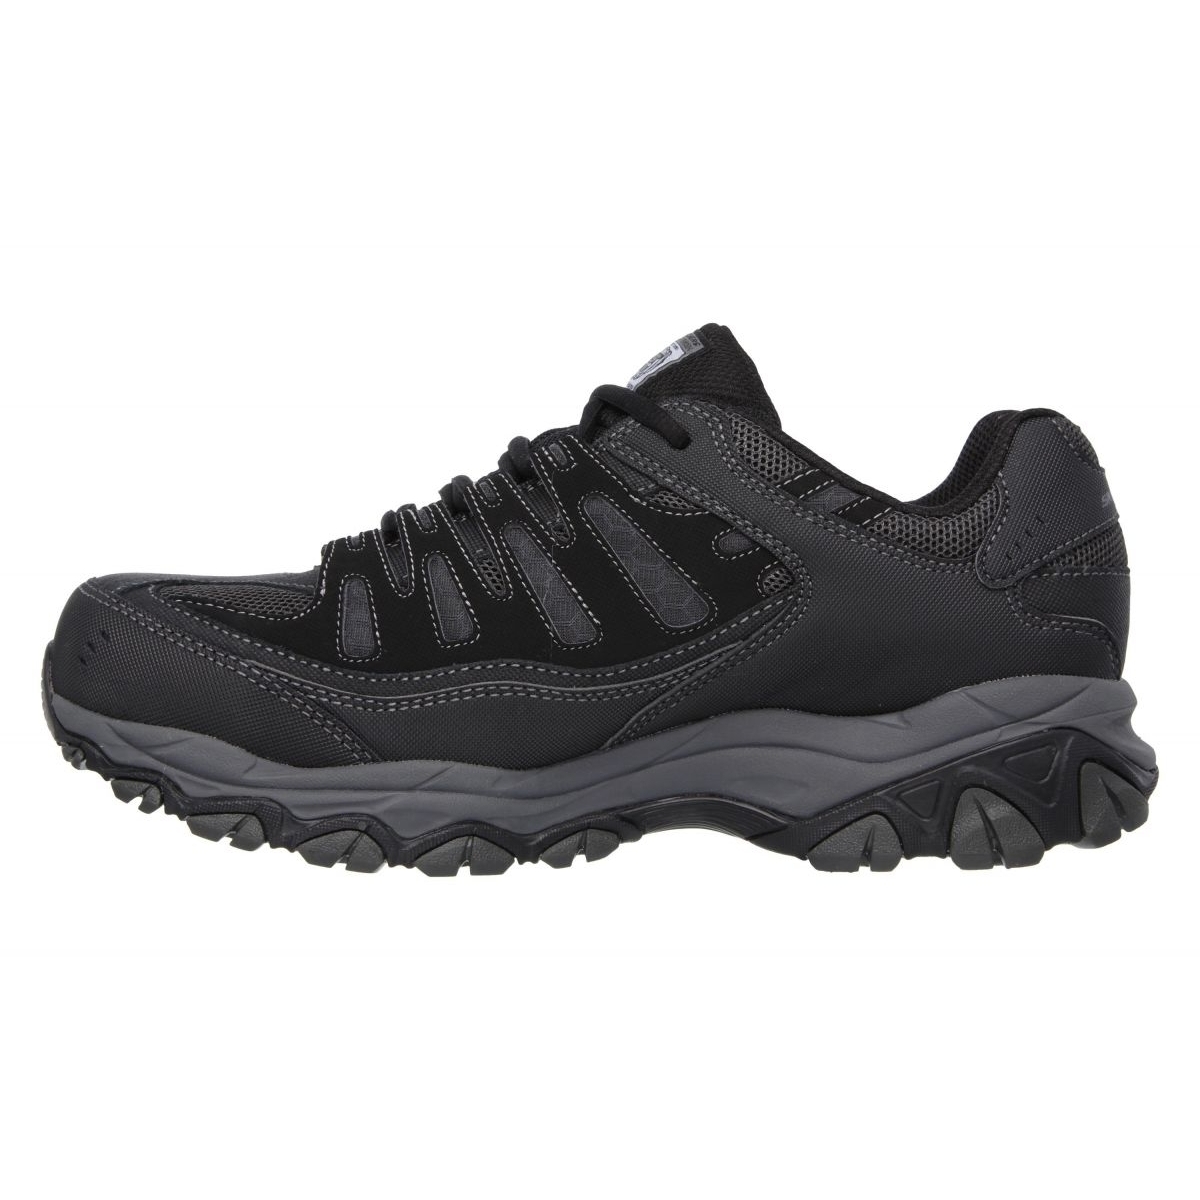 Skechers Men's Cankton-U Industrial Shoe 7 BLACK/CHARCOAL - BLACK/CHARCOAL, 11-W